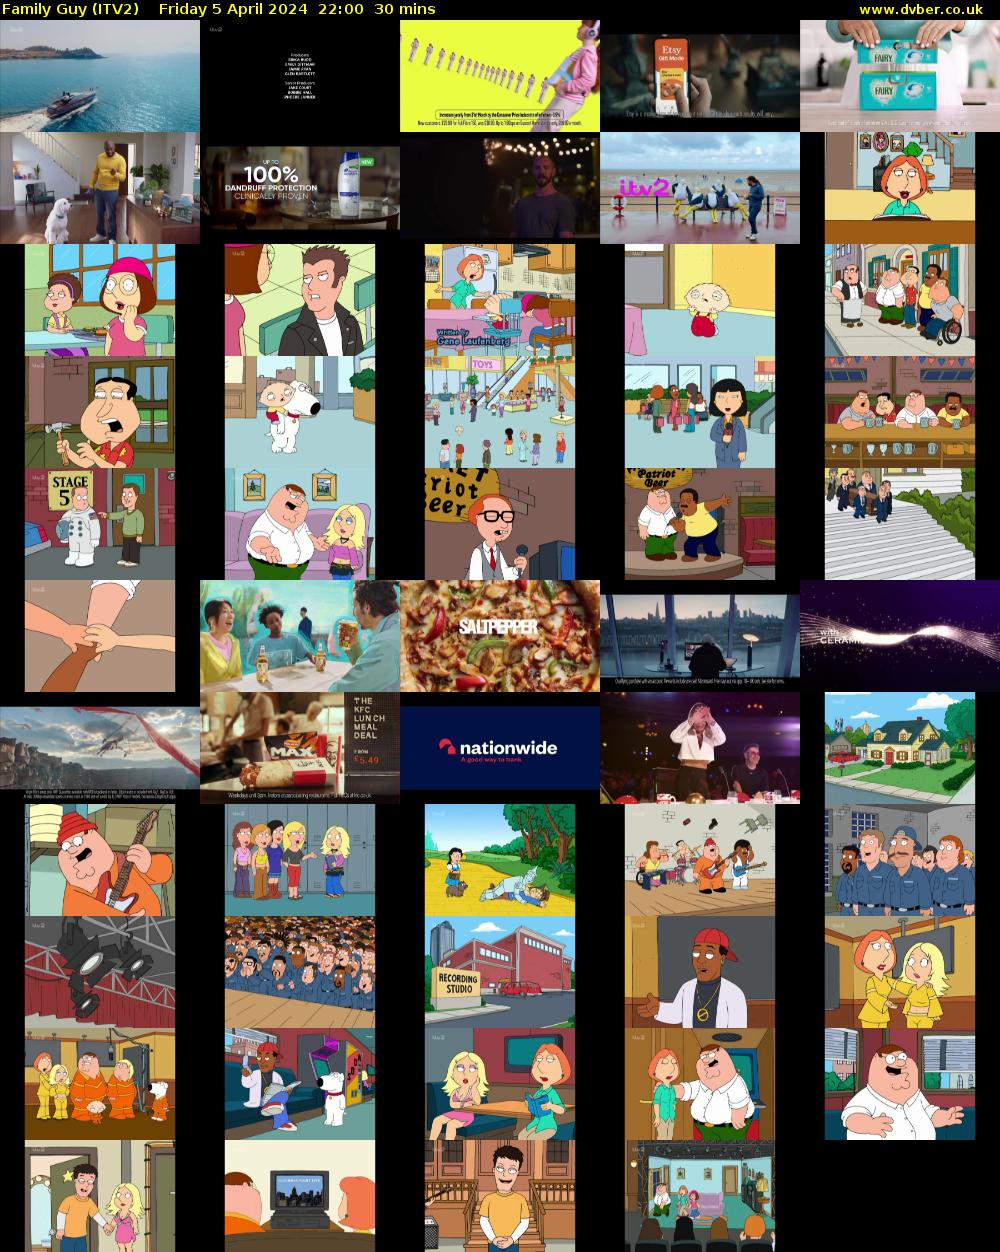 Family Guy (ITV2) Friday 5 April 2024 22:00 - 22:30